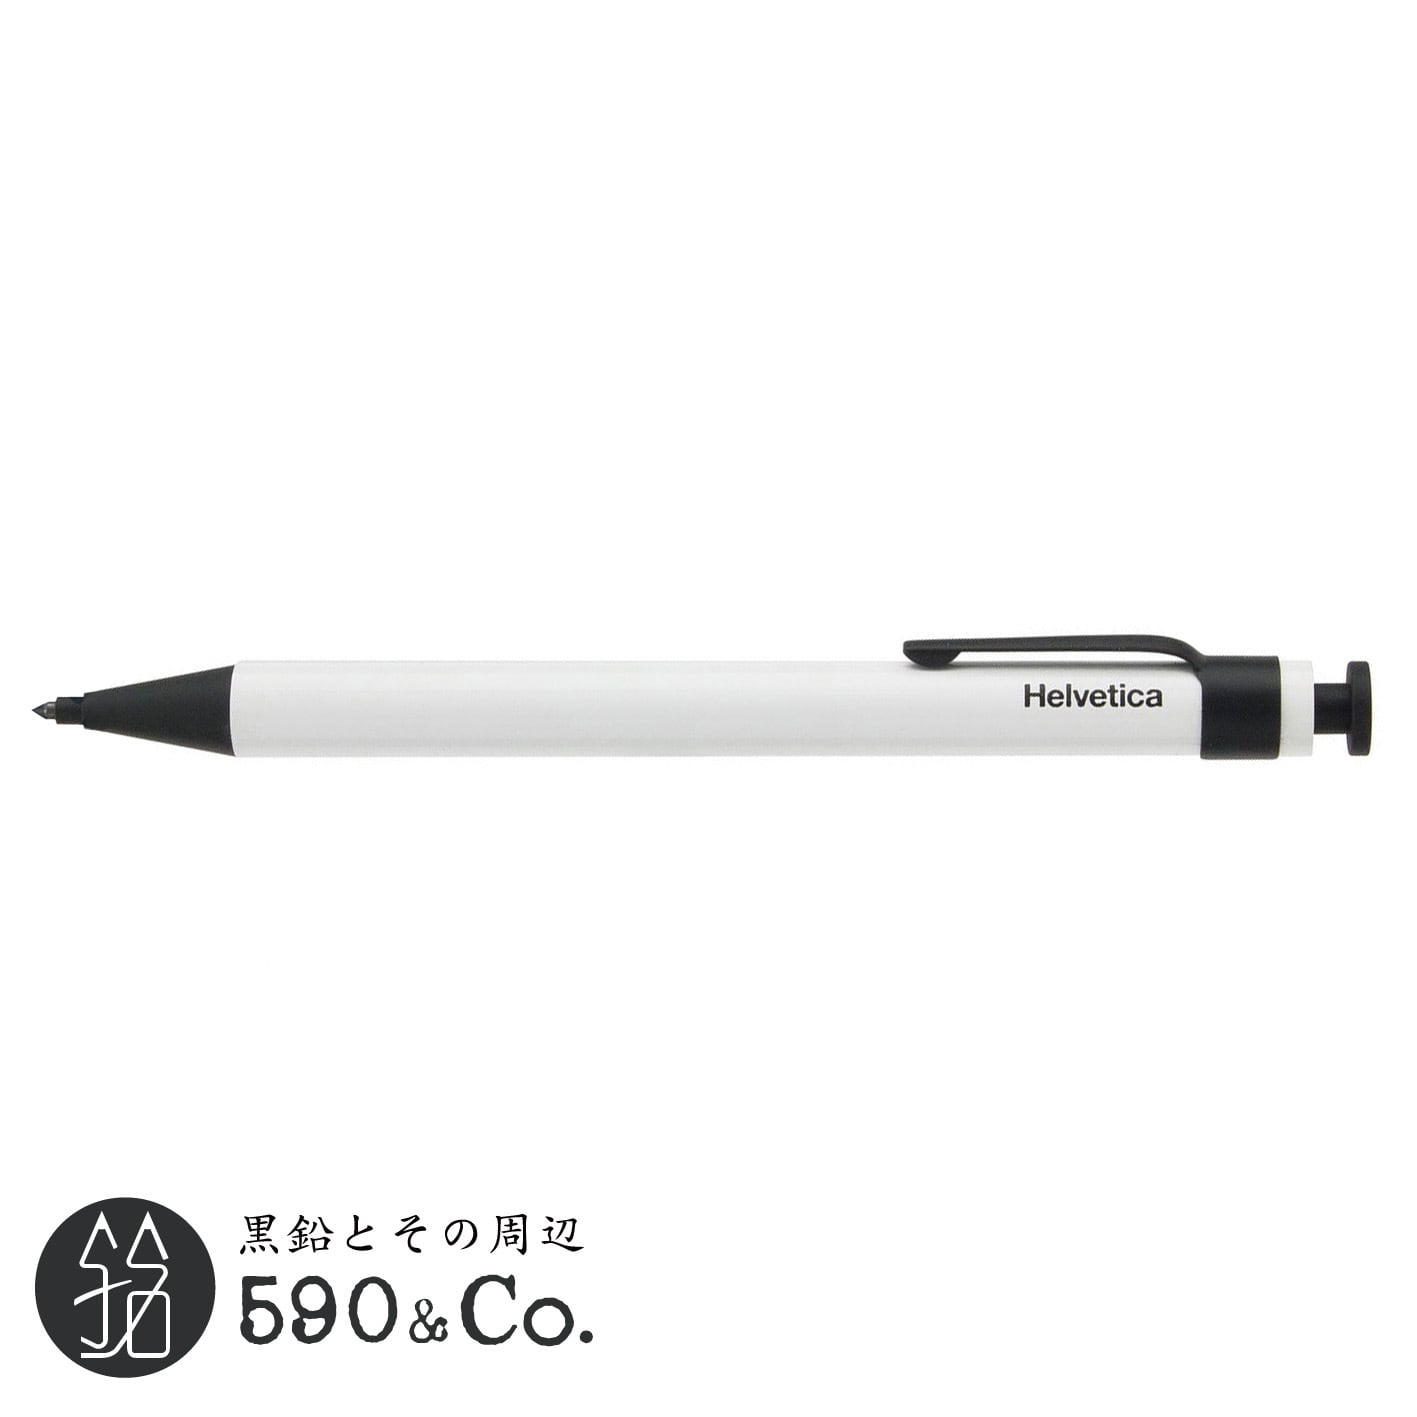 ITO-YA/伊東屋】2.0mm芯 木軸シャープペン(ホワイト) | 590&Co.